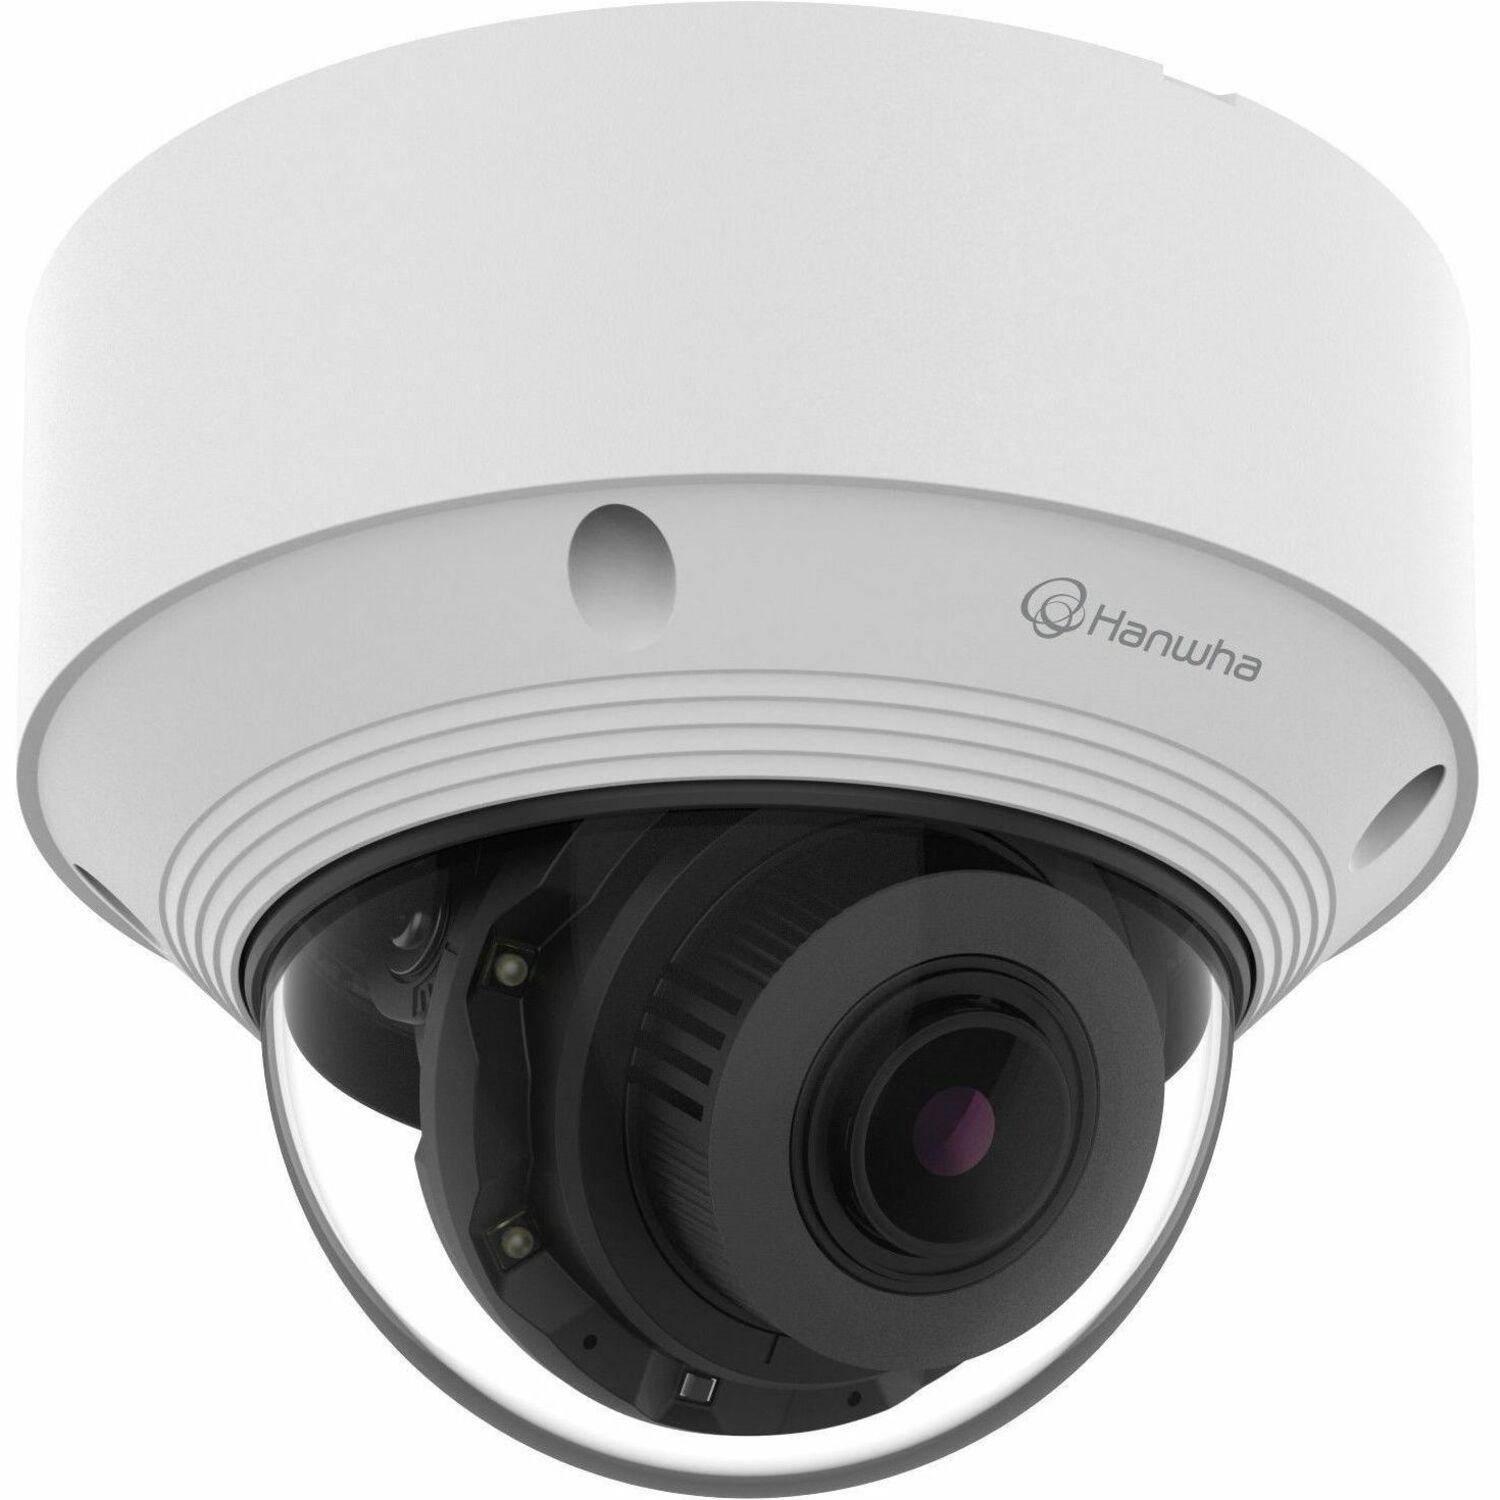 Hanwha QNV-C8083R 5 Megapixel Outdoor Network Camera - Colour - Dome - White